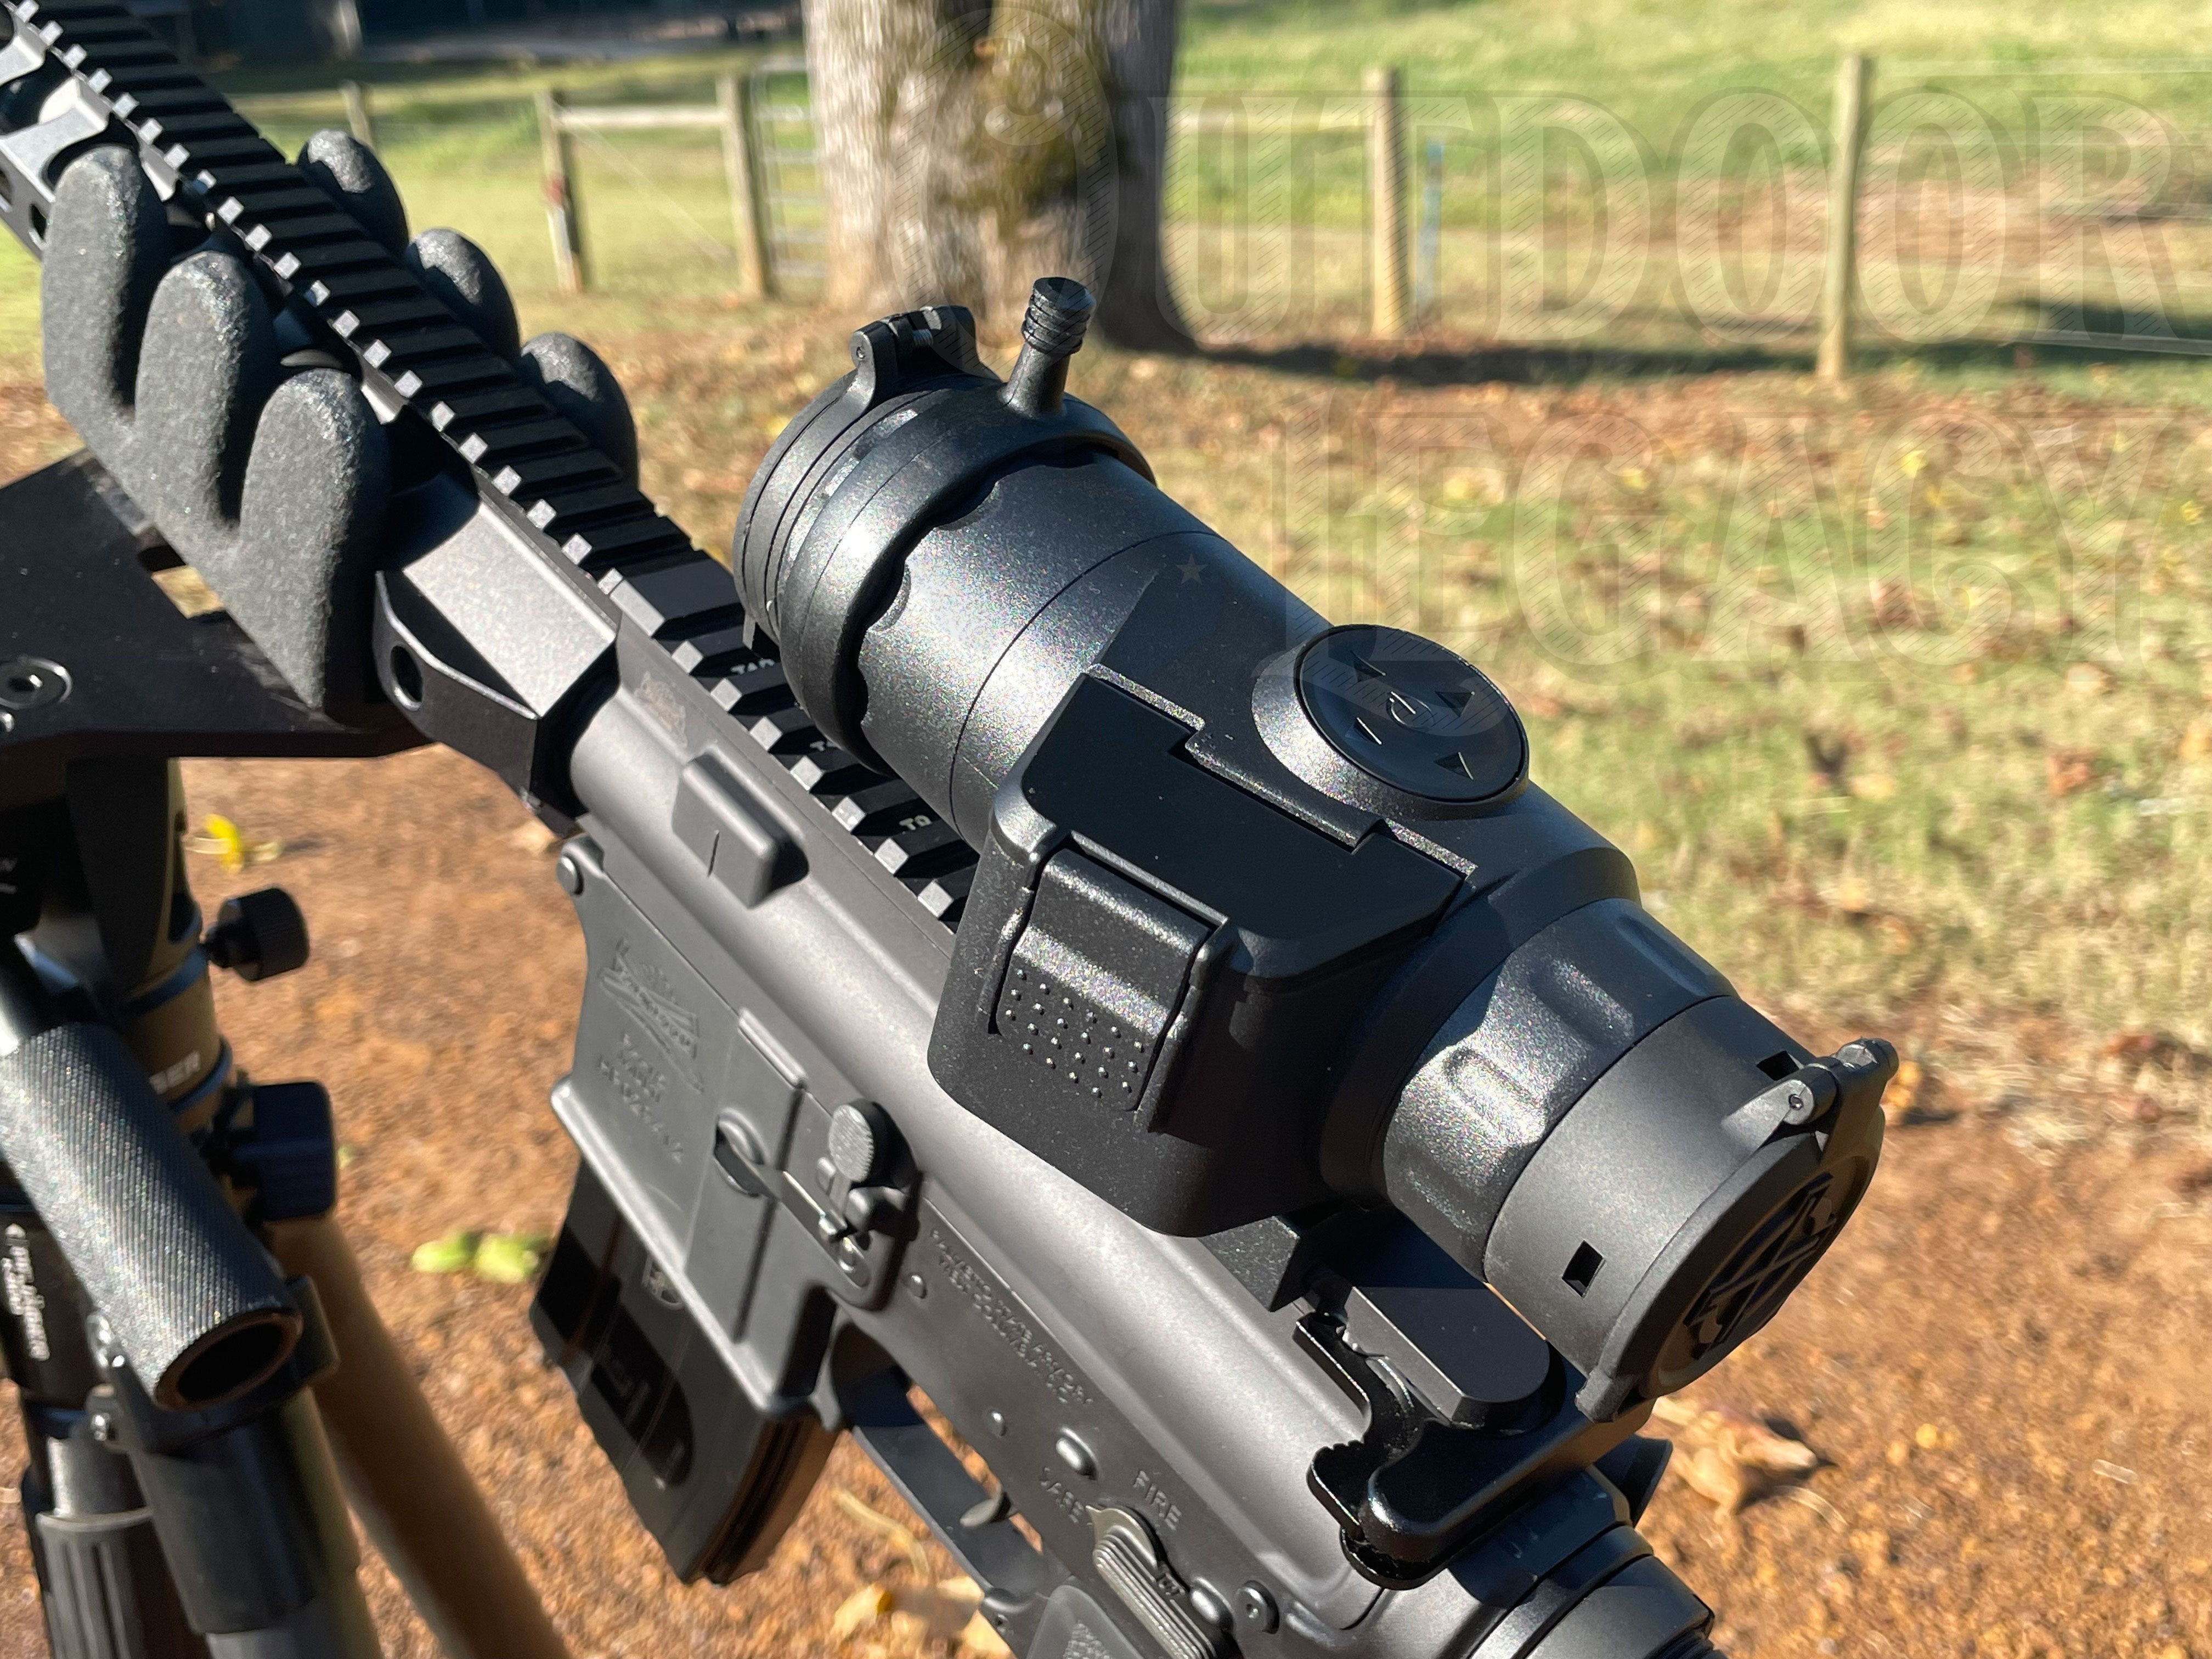 Sightmark Wraith 4K Mini 2-16x32 Digital Riflescope